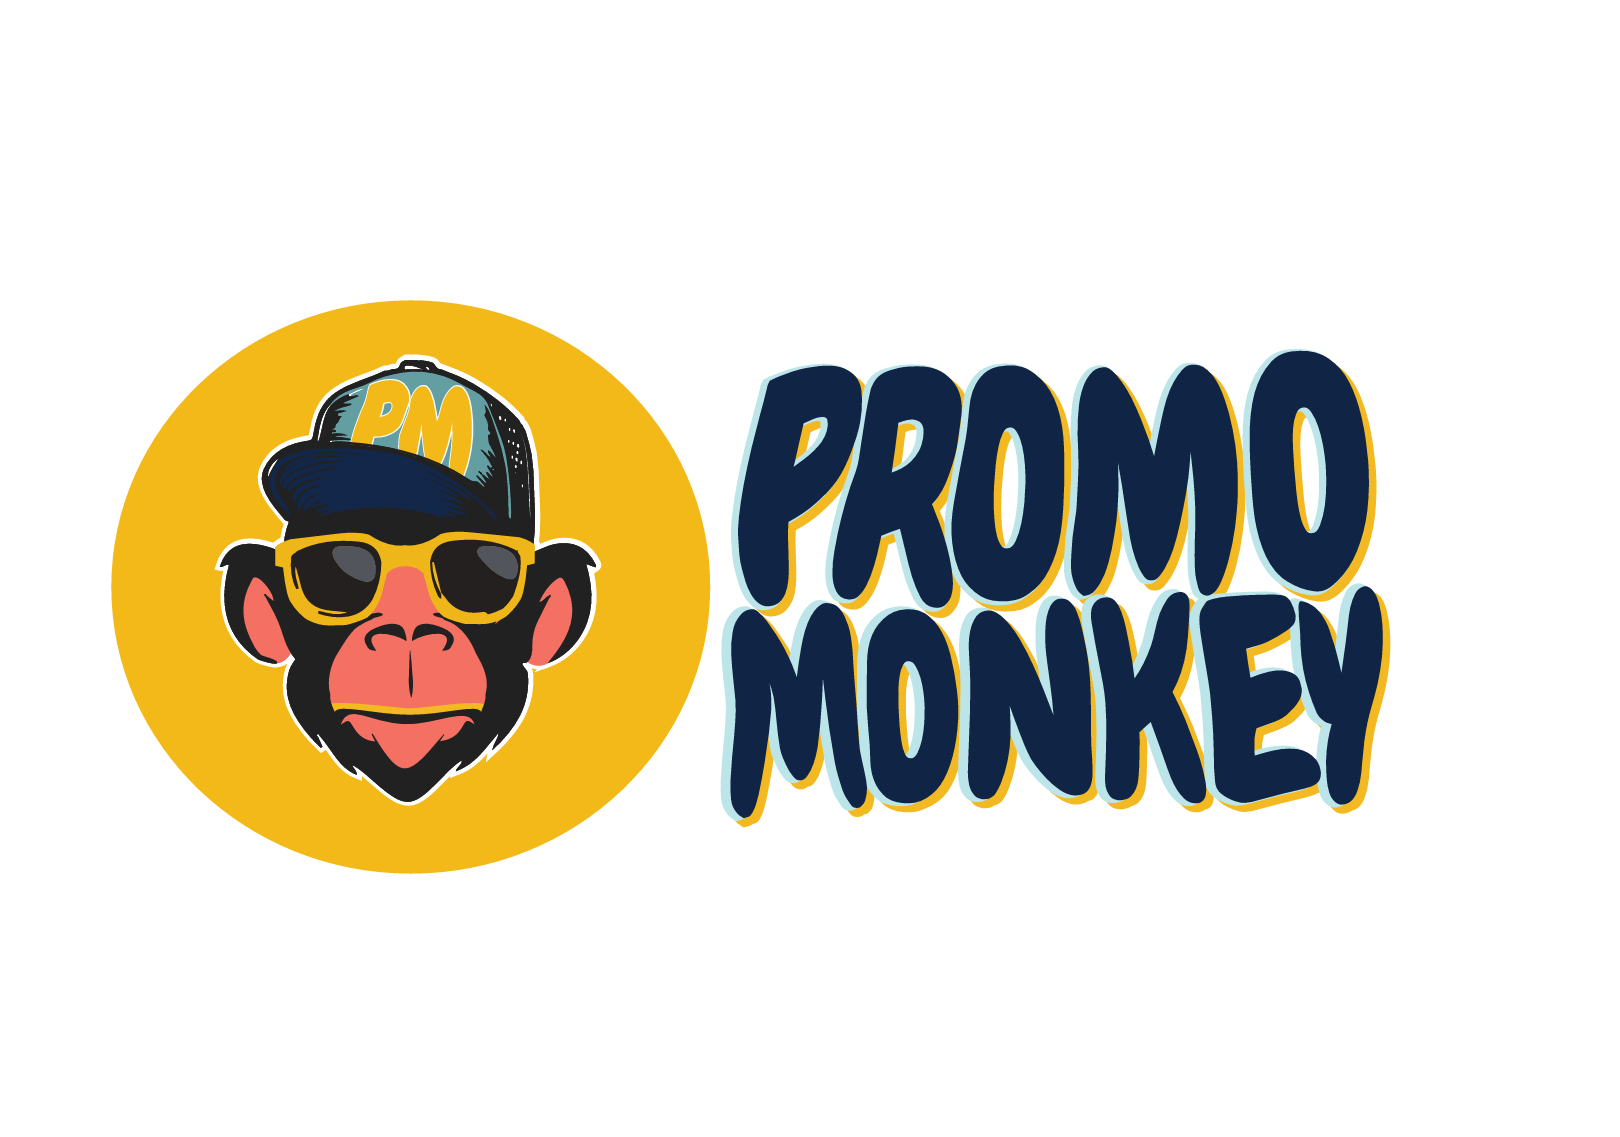 Home - Monkey Marketing Promotions